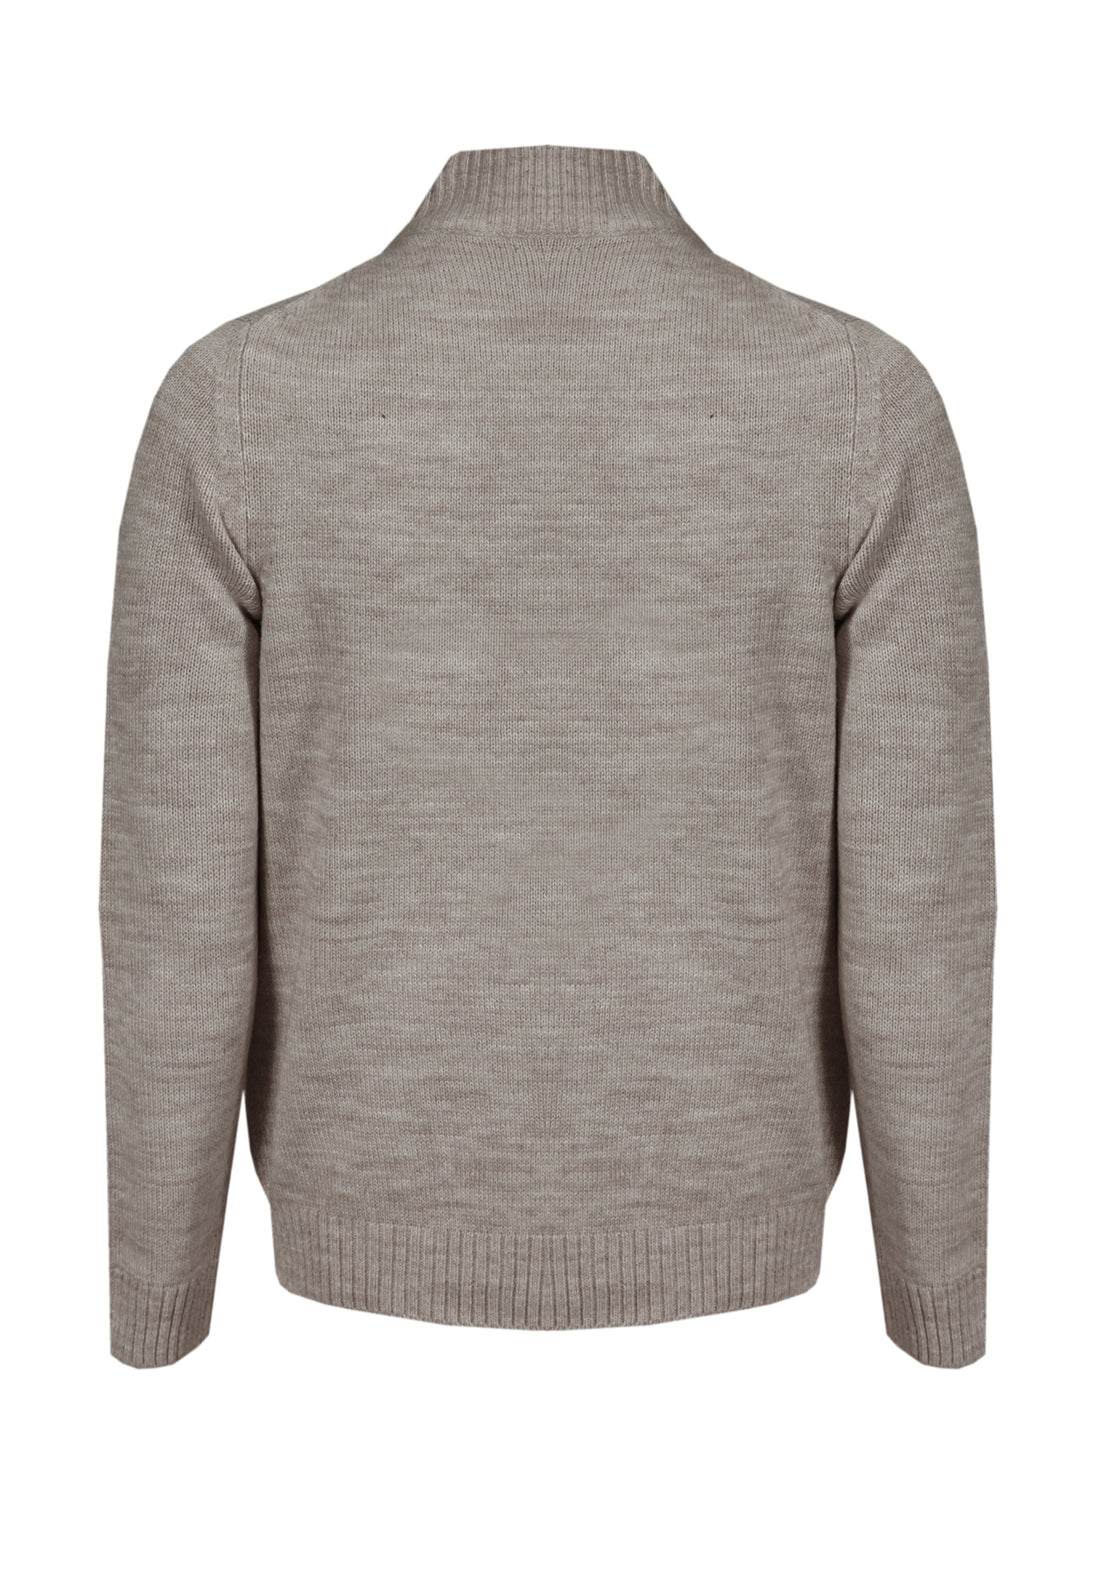 Contrast Suede Cardigan Sweater - Beige